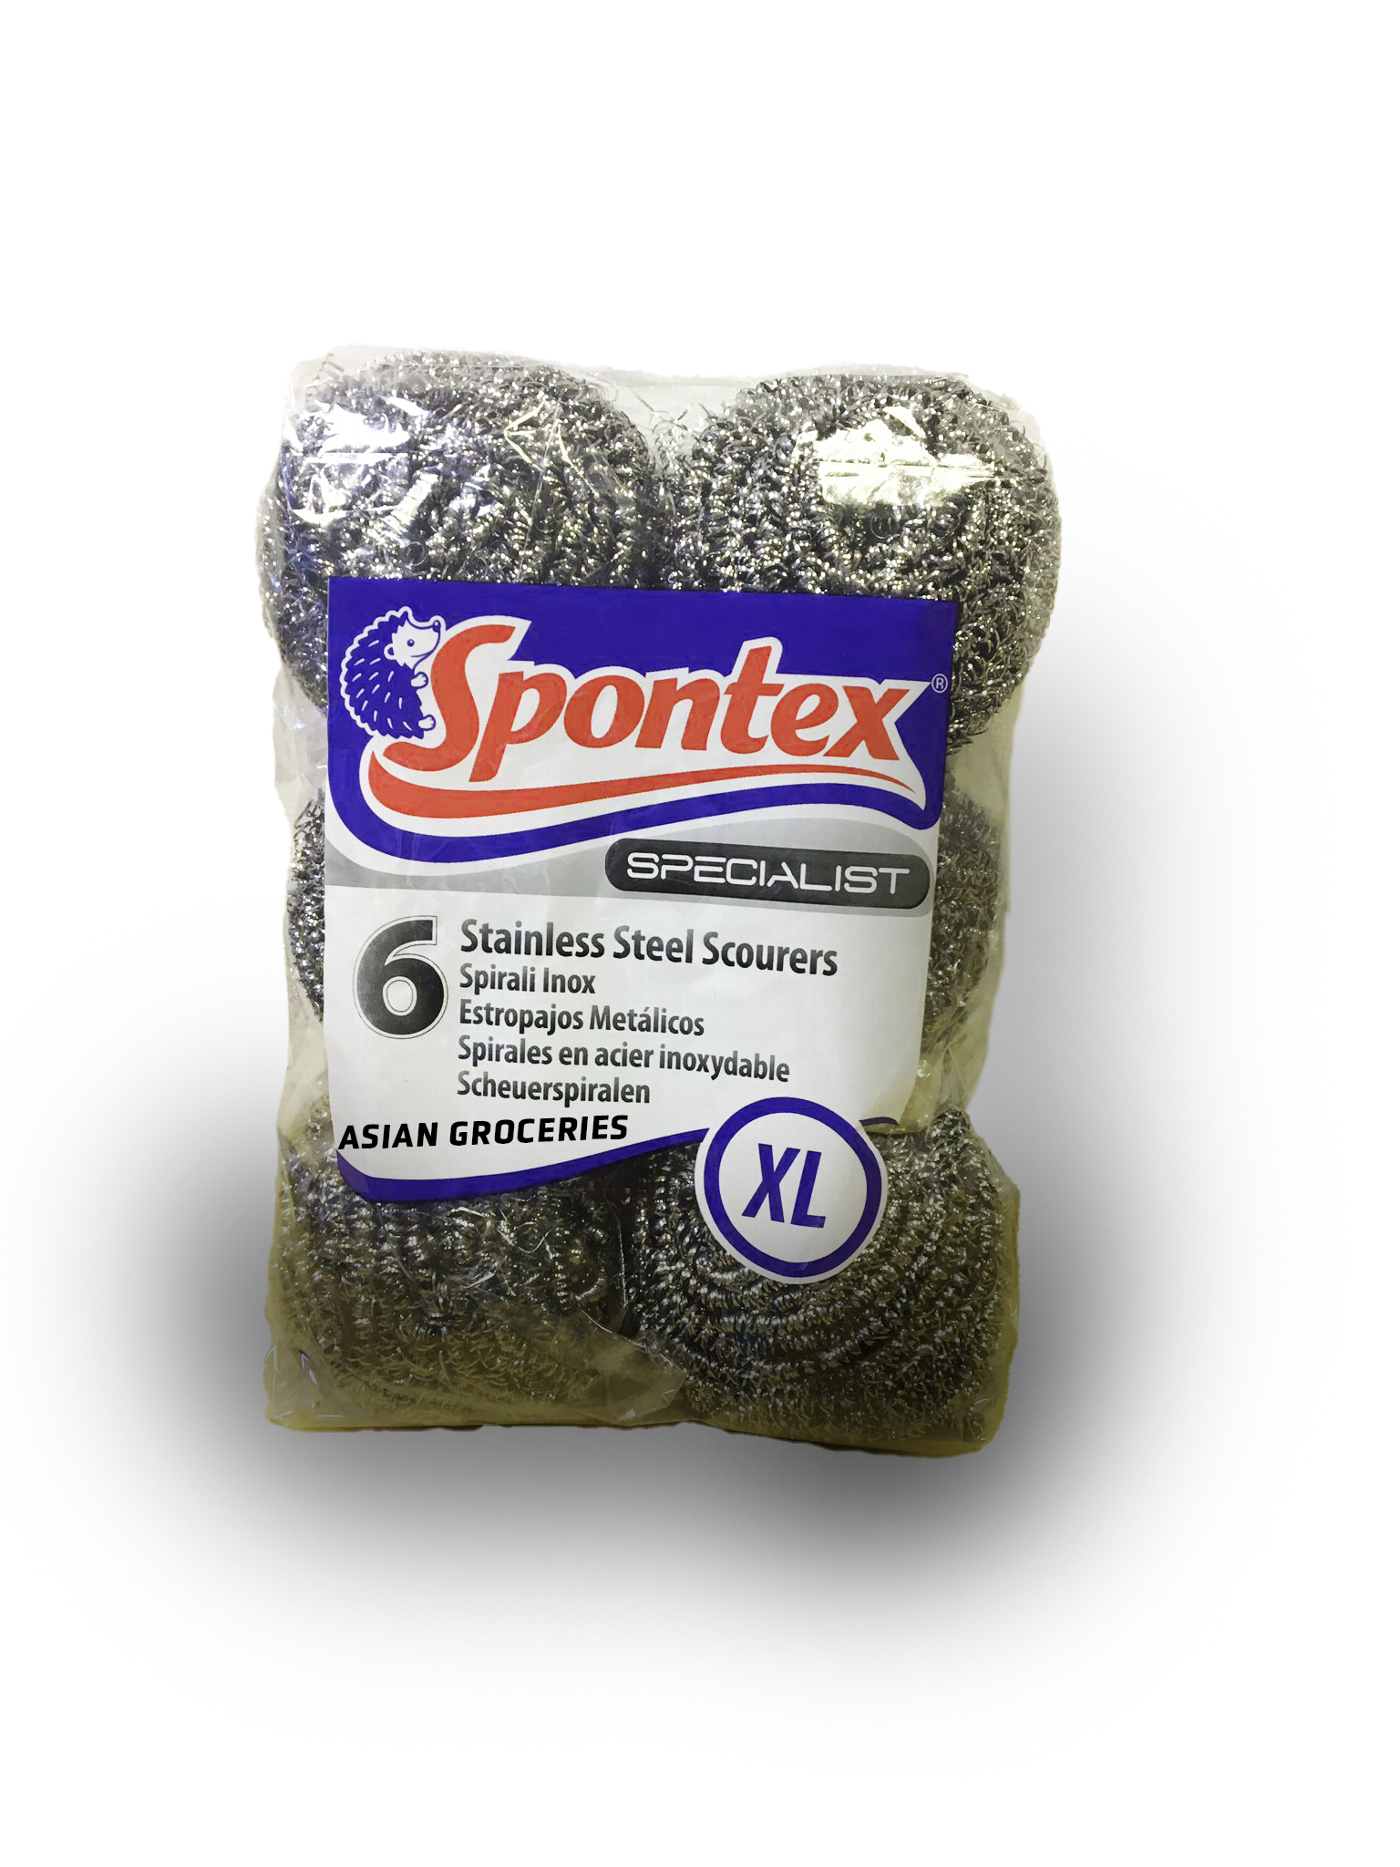 Spontex Specialist Stainless Steel Scourers